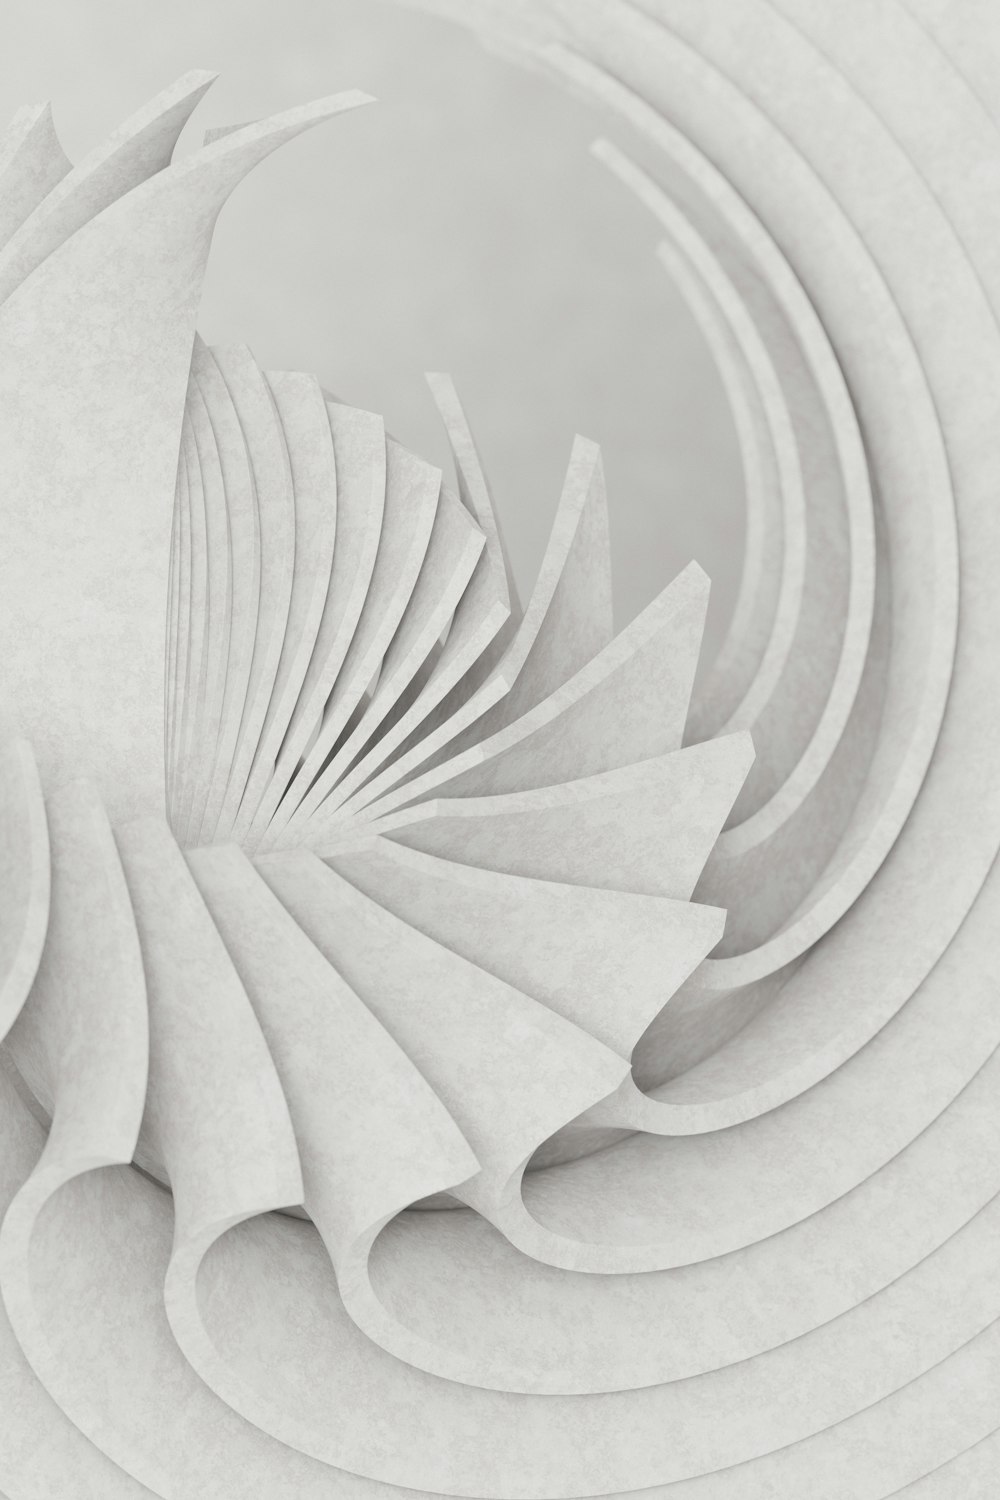 a white paper sculpture with a spiral design